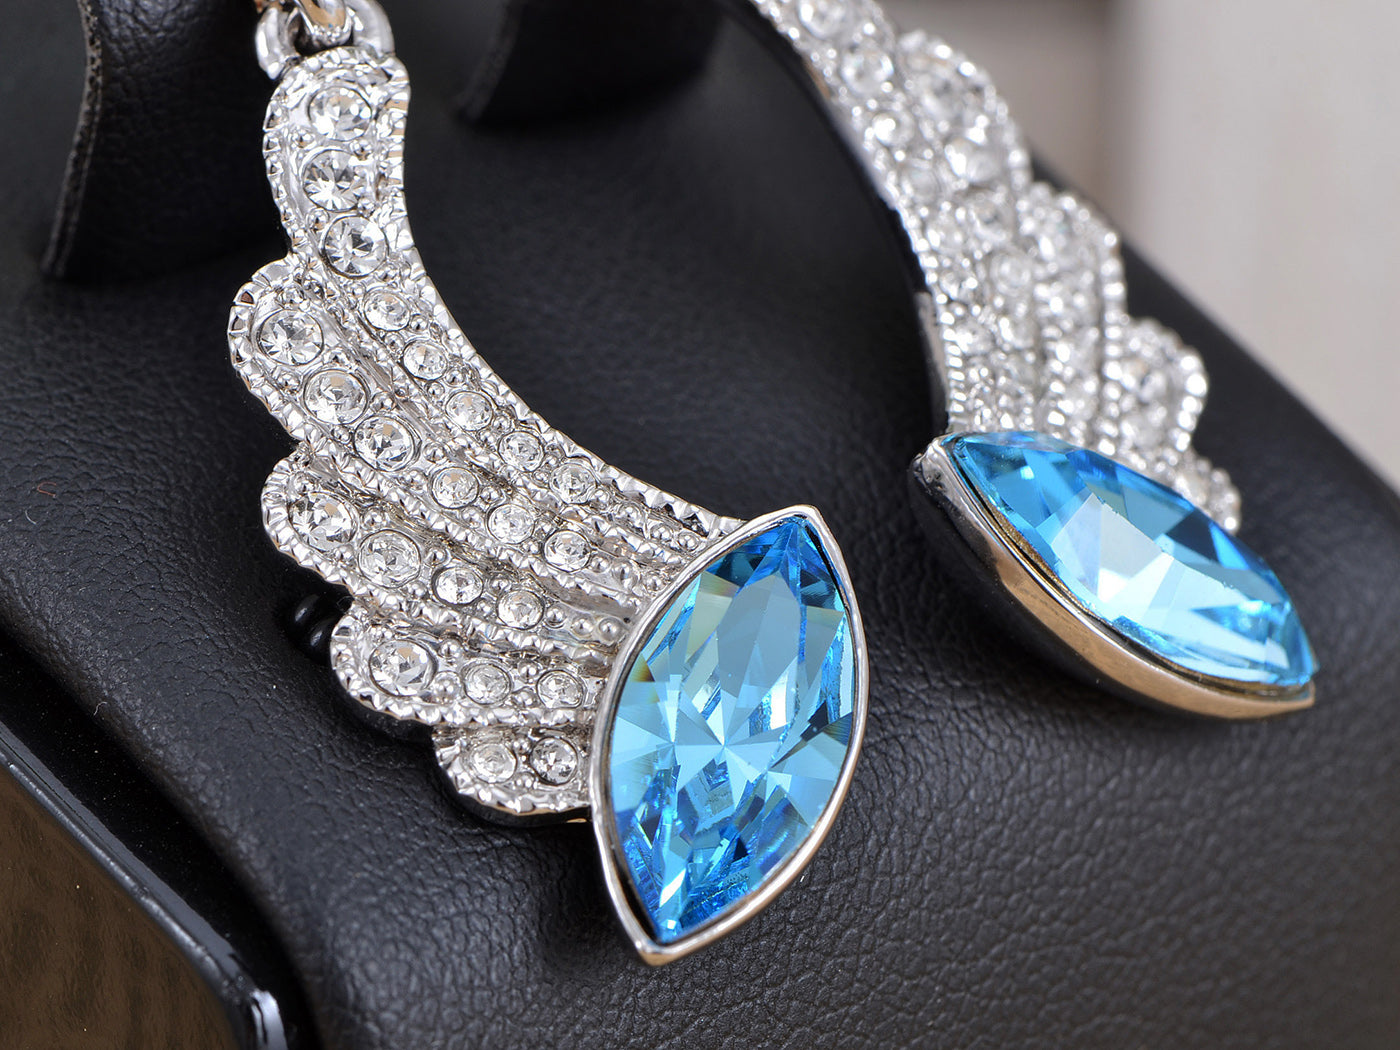 Swarovski Crystal Element Silver Blue Marquise Cut Angel Wing Dangle Earrings